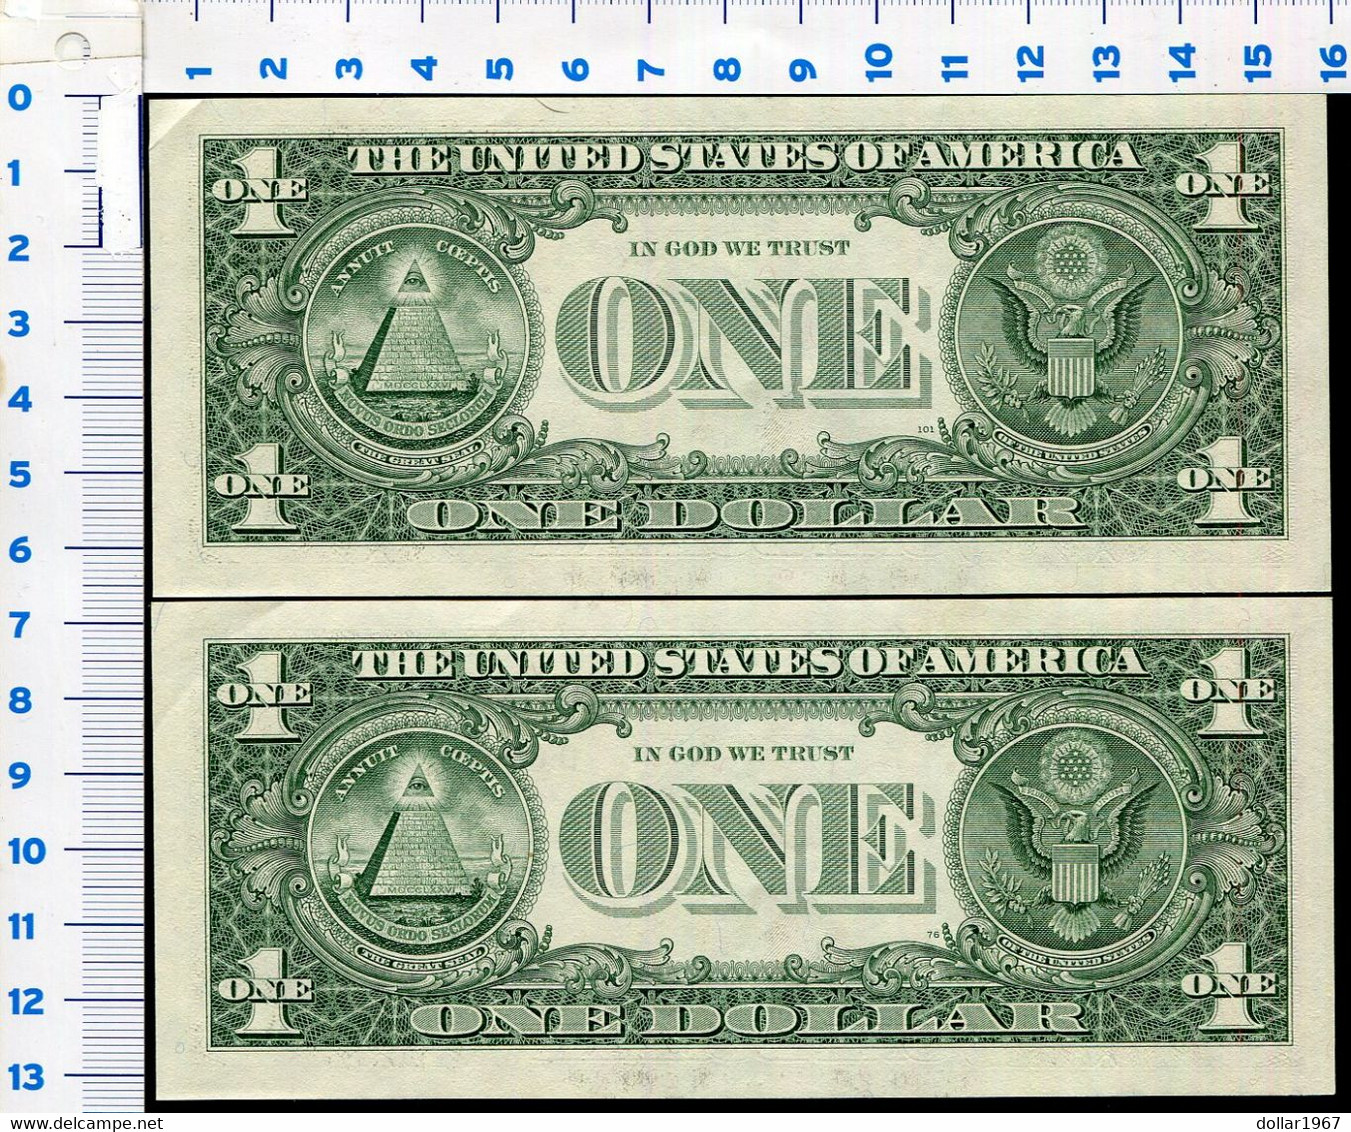 2 X USA 1 Dollar 2003 WASHINGTON P.537 - 4 D 06722413 / 14 B - Otros – América